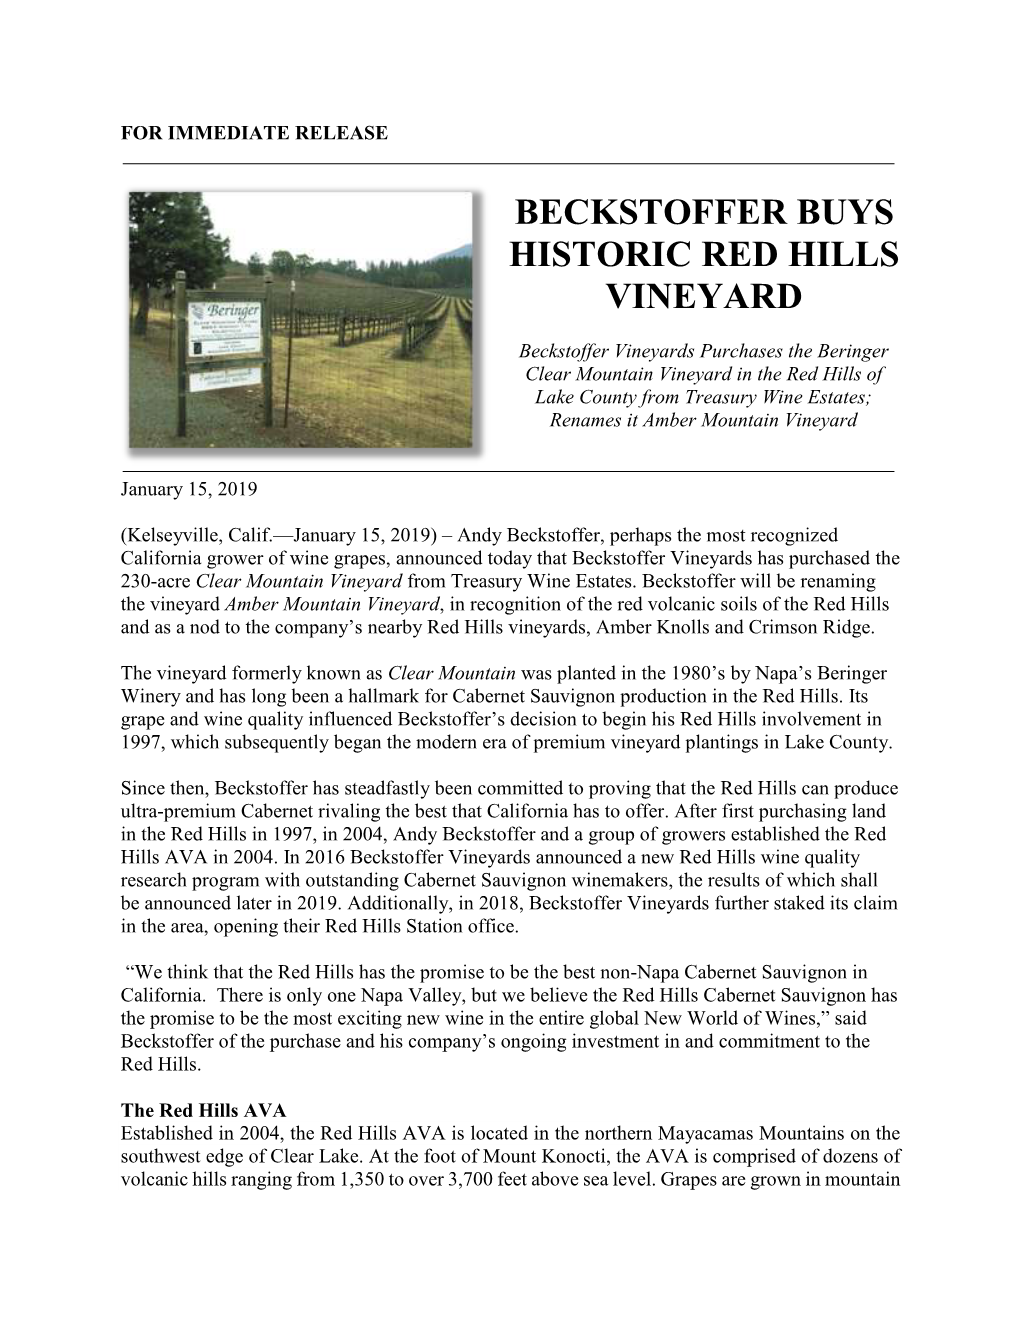 Beckstoffer Buys Historic Red Hills Vineyard